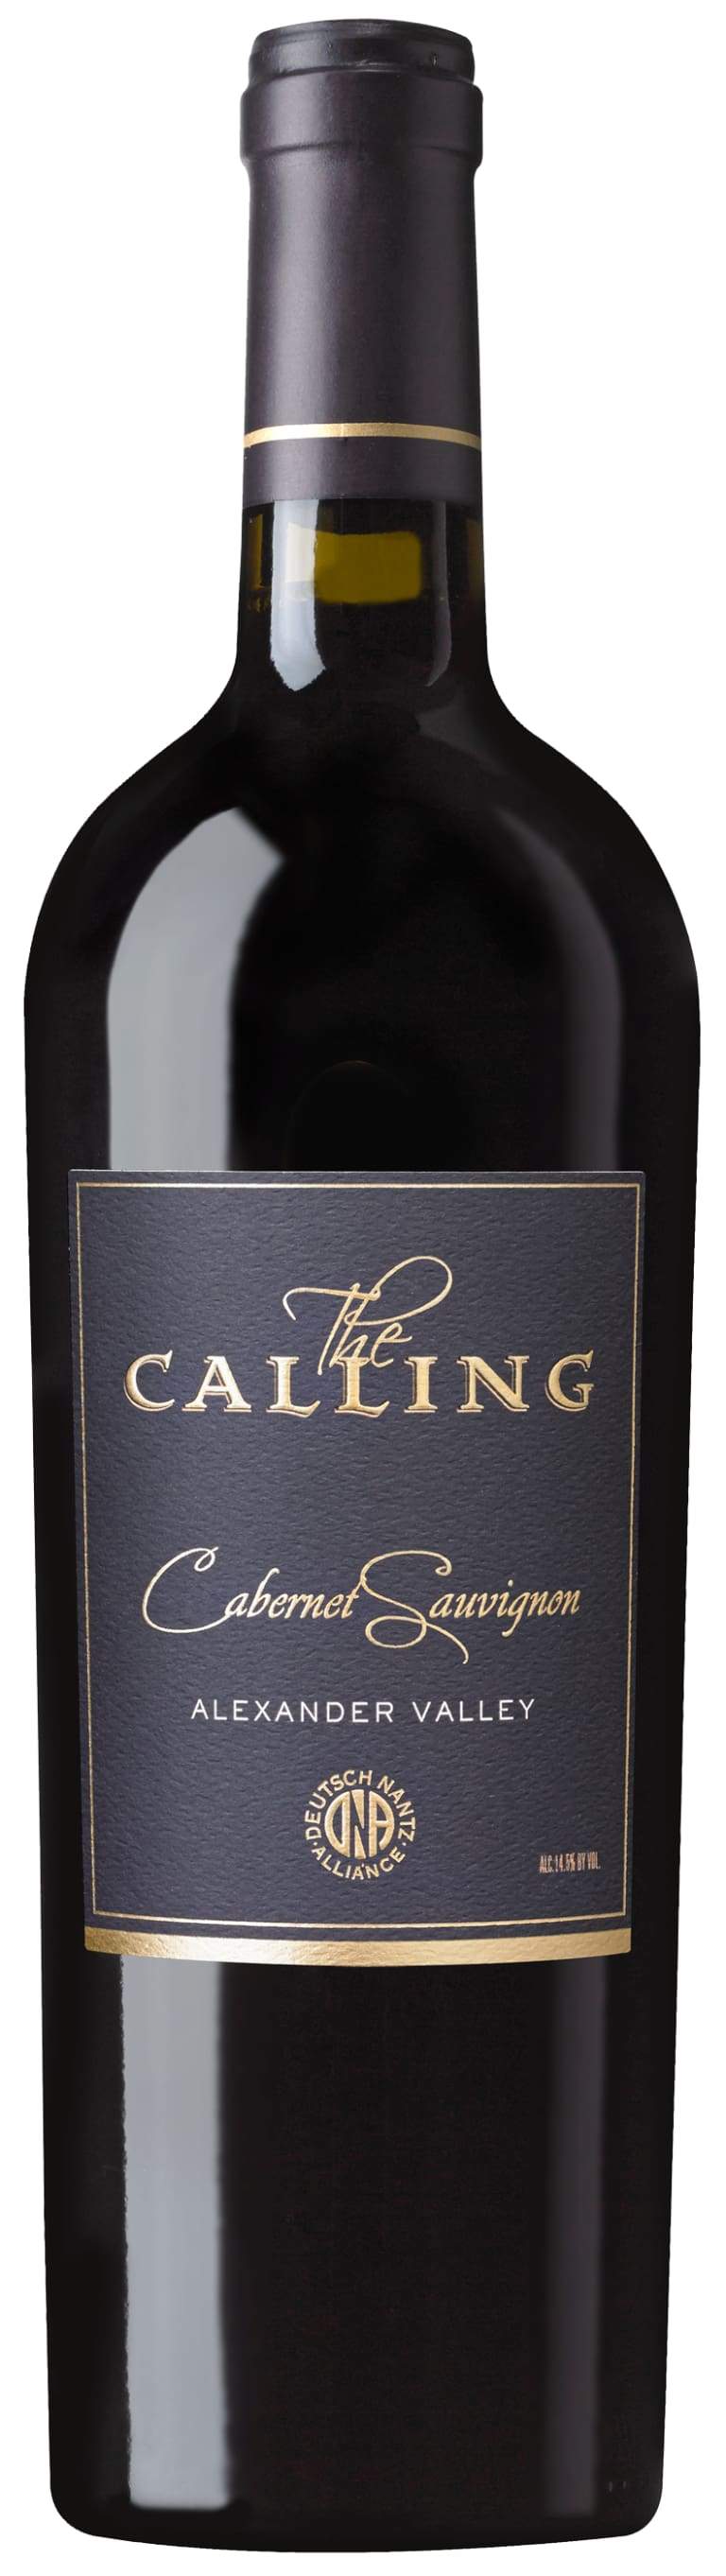 The Calling Cabernet Sauvignon 2016